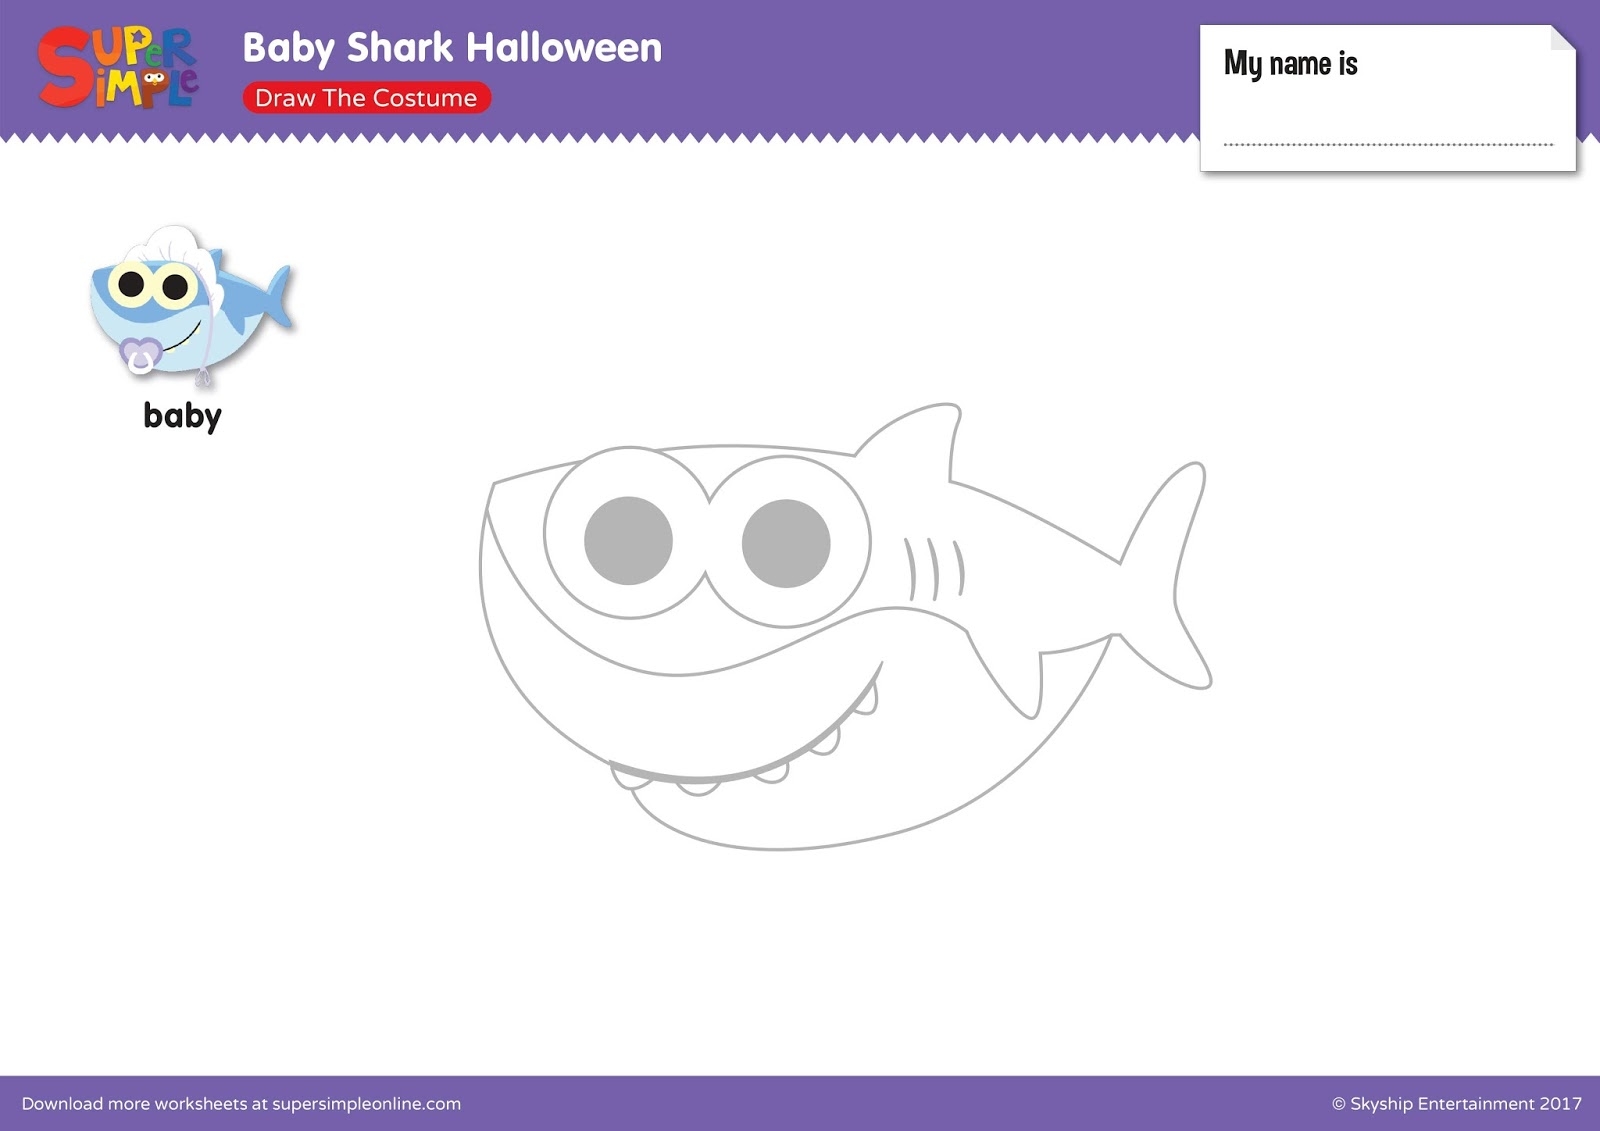 Baby shark simple song. Baby Shark. Бэби Шарк Хэллоуин. Раскраска Акуленок туруру. Baby Shark super simple.